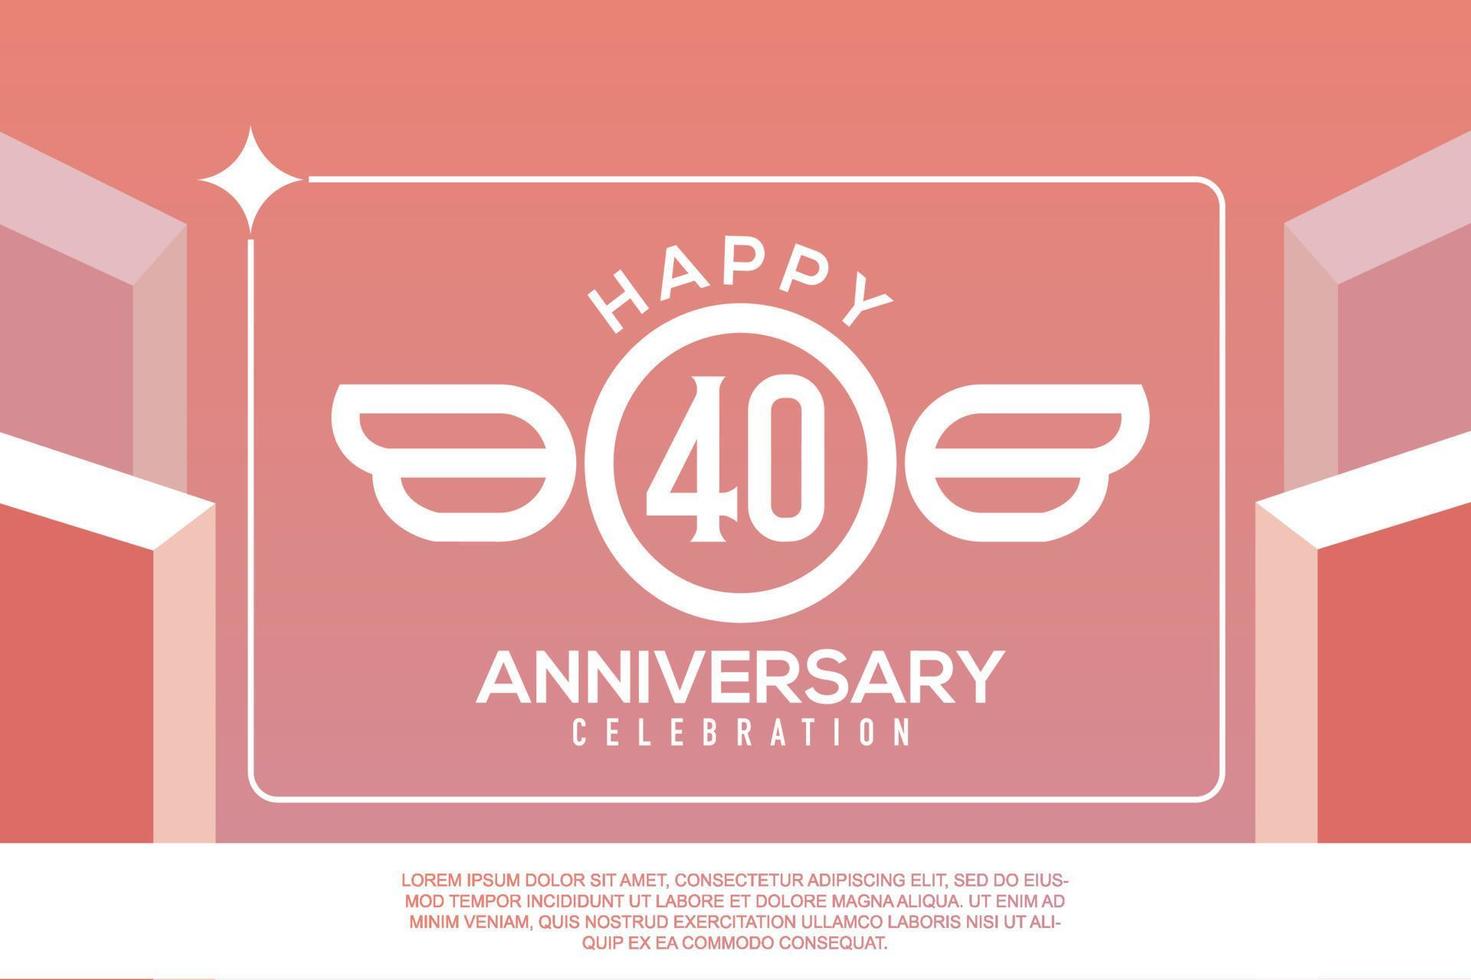 40:e år årsdag design brev med vinge tecken begrepp mall design på rosa bakgrund vektor